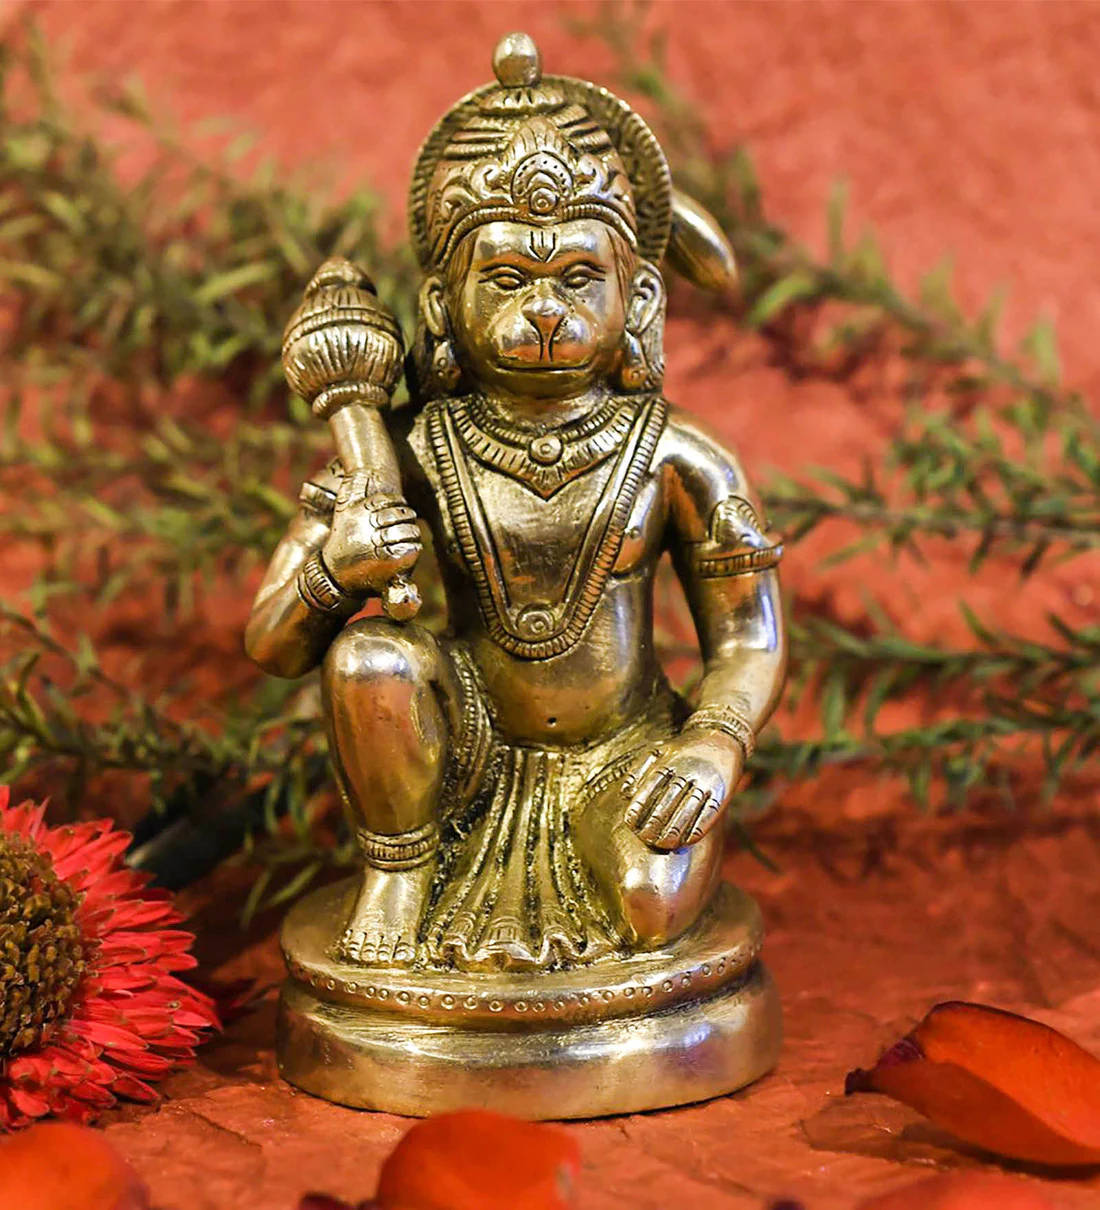 Kneeling Lord Hanuman 3d Gold Figure